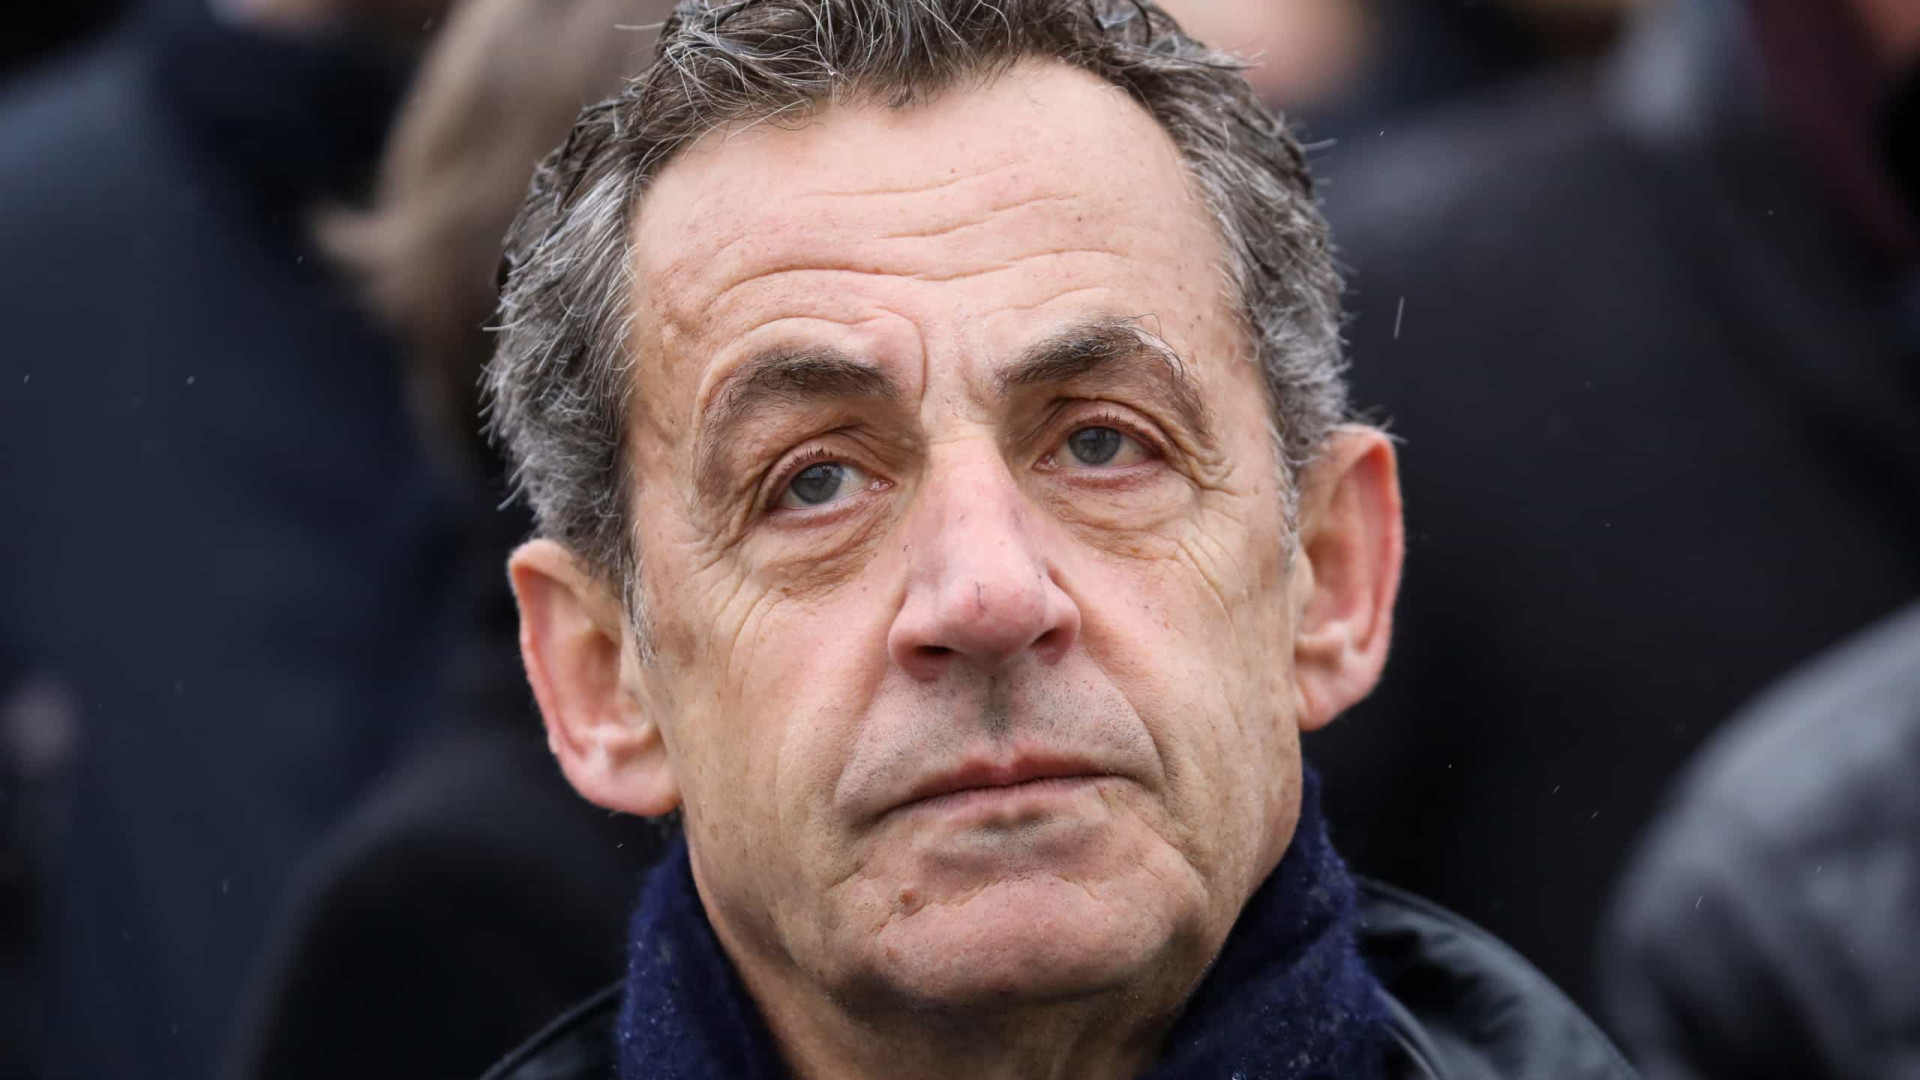 Nicolas Sarkozy é condenado de novo por financiamento ilegal de campanha eleitoral